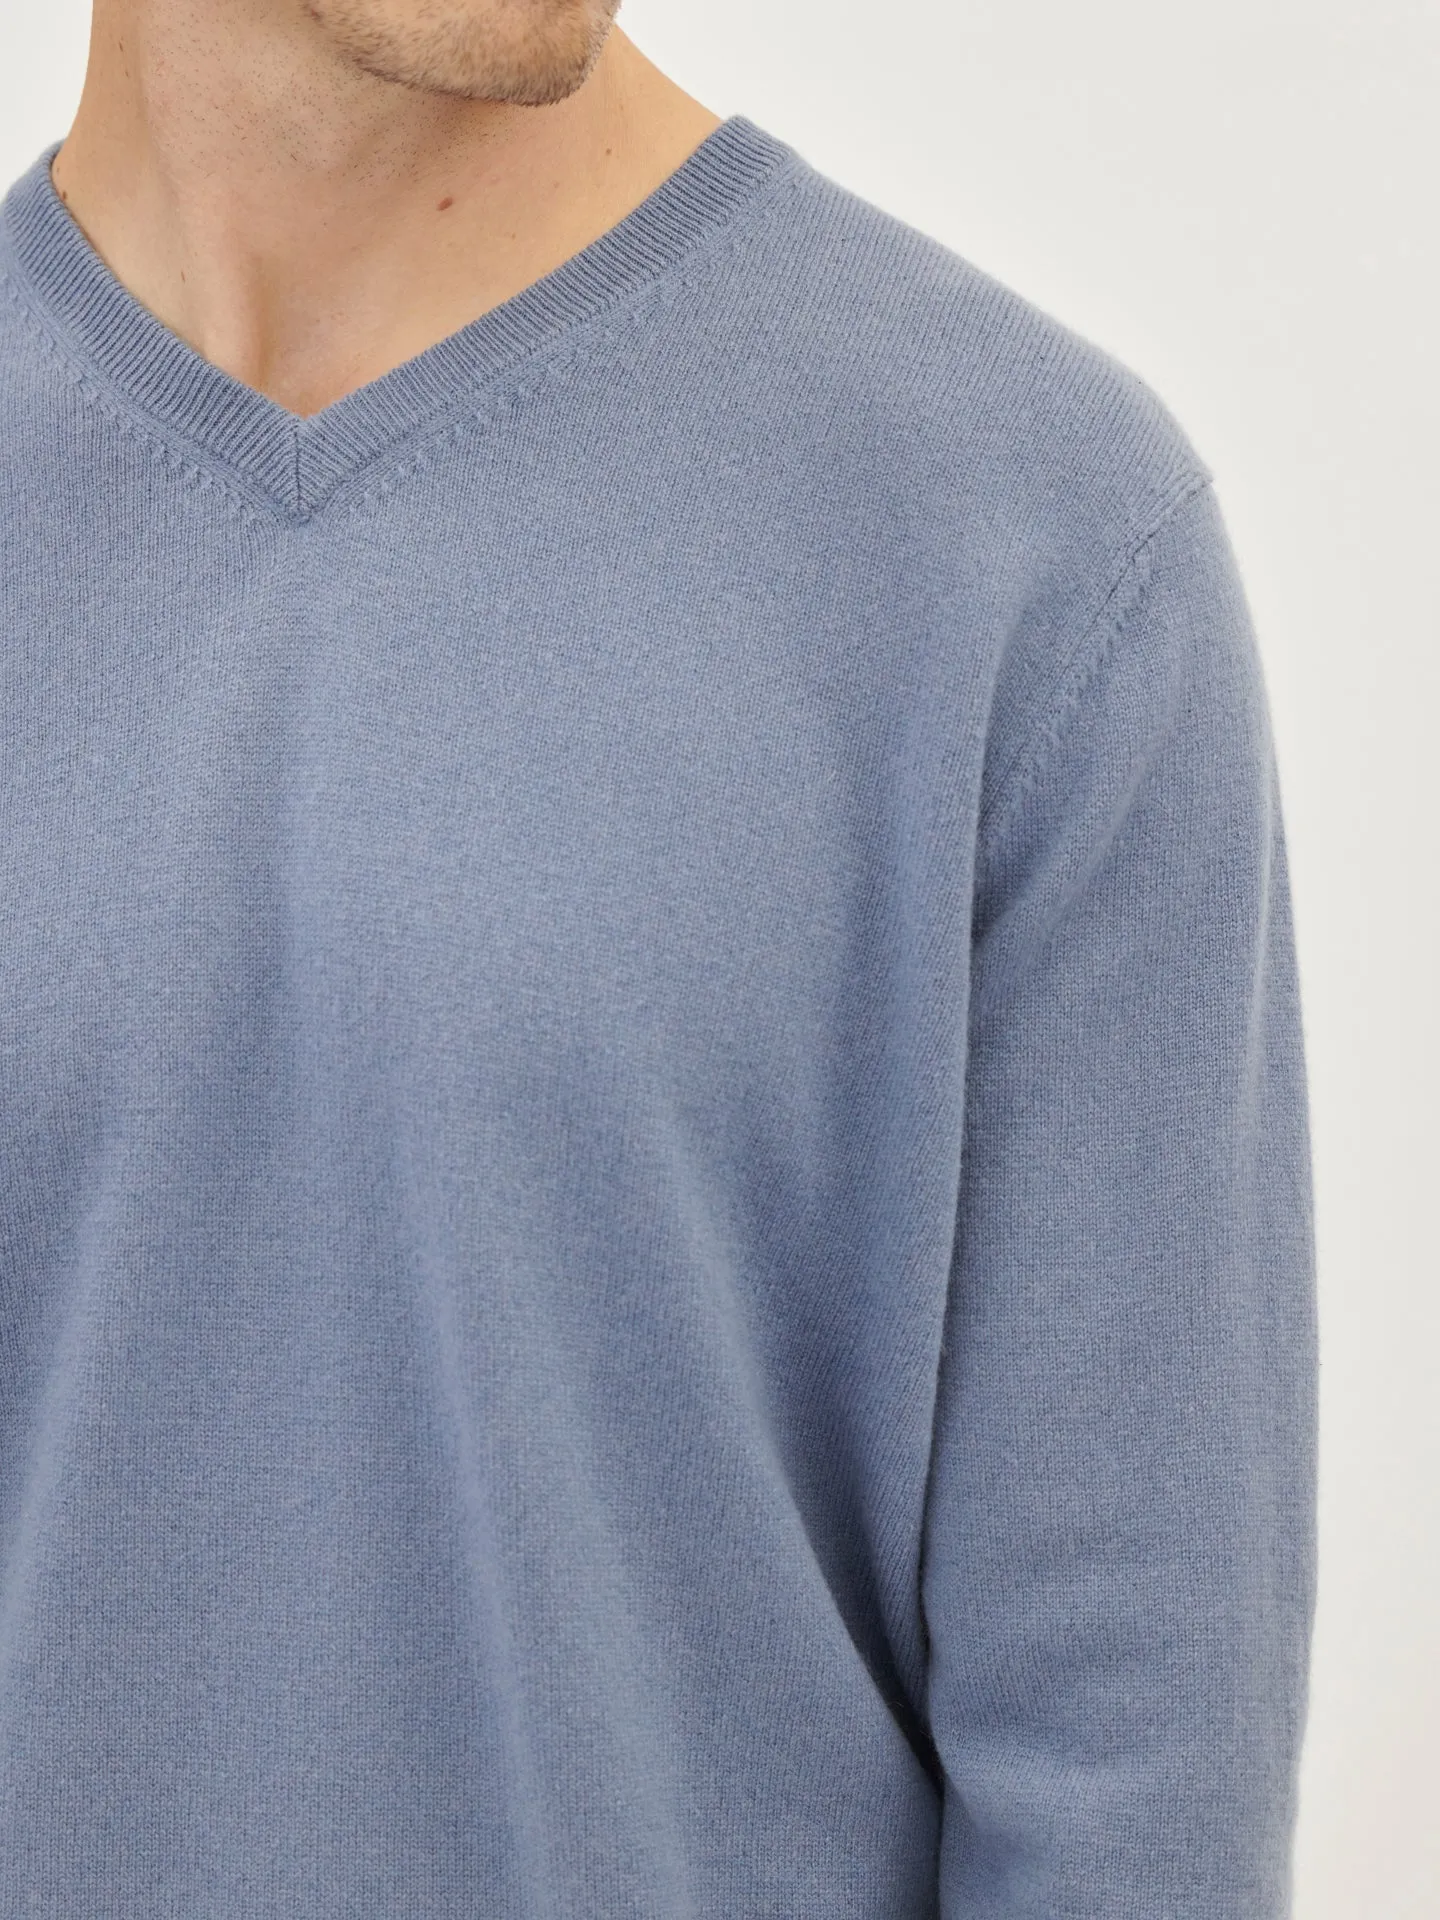 Men's Cashmere Basic V-Neck Sweater Purple Impression - Gobi Cashmere